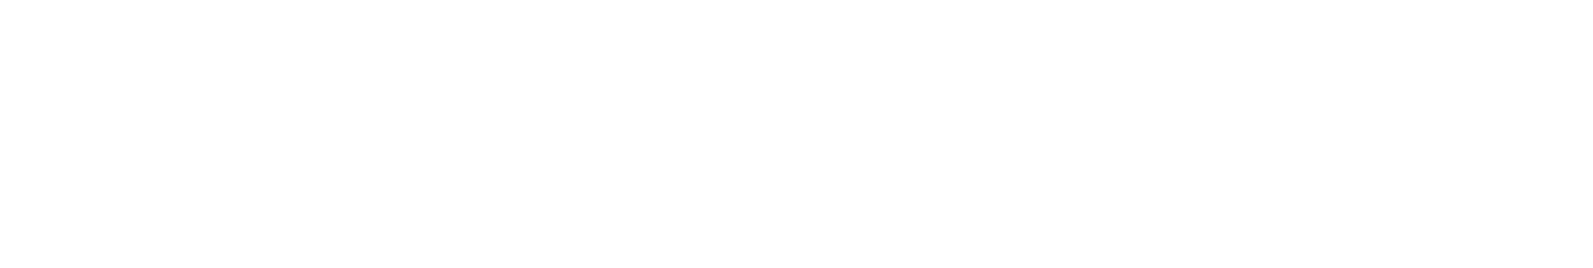 Wheaton Precious Metals logo grand pour les fonds sombres (PNG transparent)